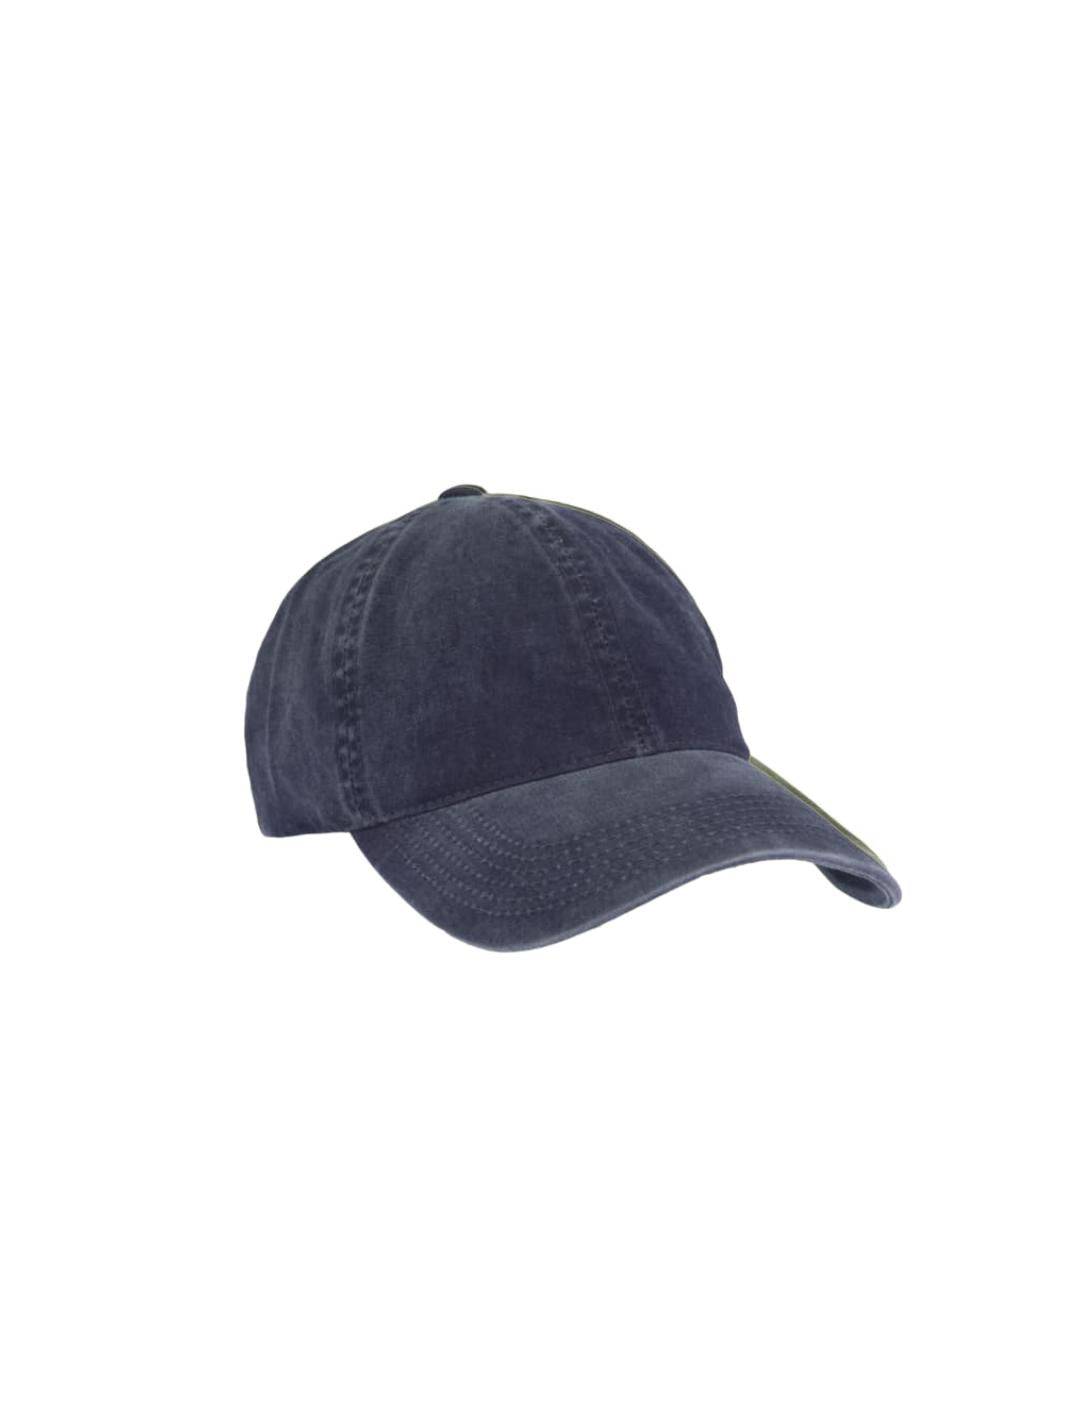 Varsity Headwear Accessories Cap | Navy Washed Cotton